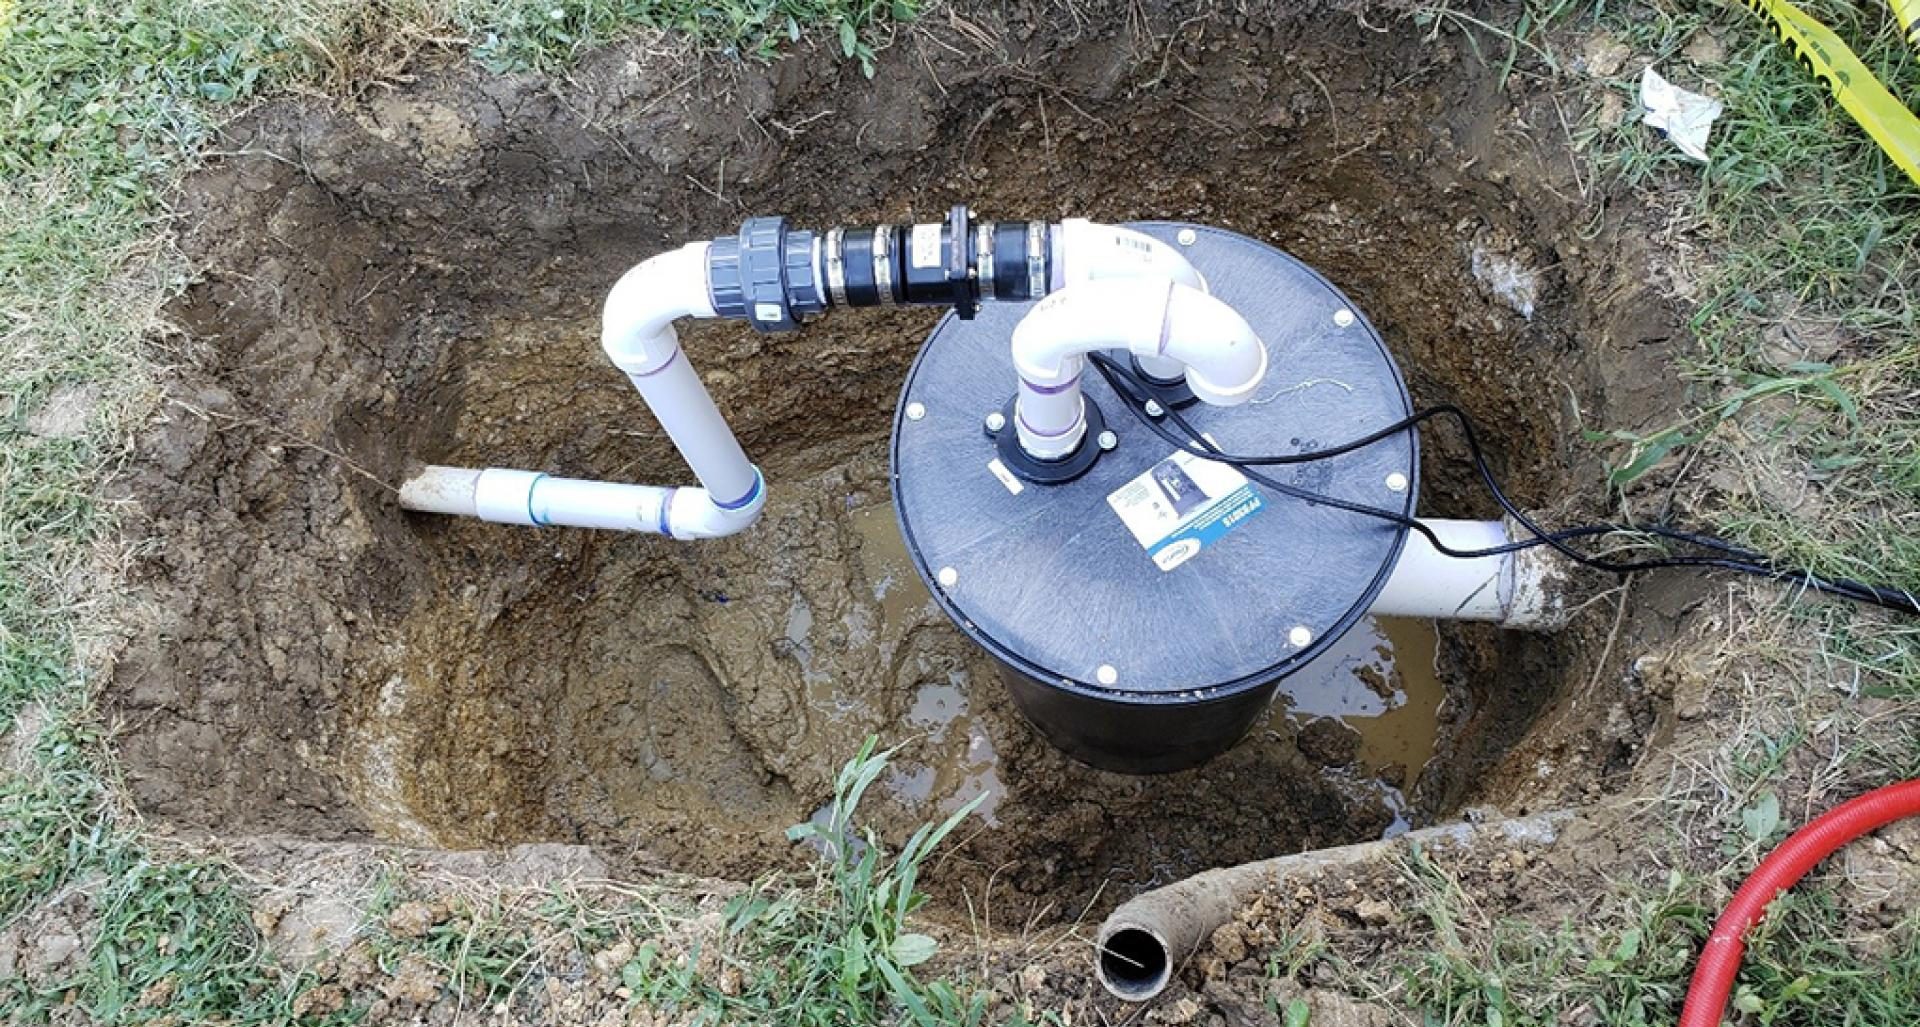 https://nolascoplumbing.com/wp-content/uploads/2022/02/Sewage-Pump-Sewage-Ejectors-e1645137256602.jpg